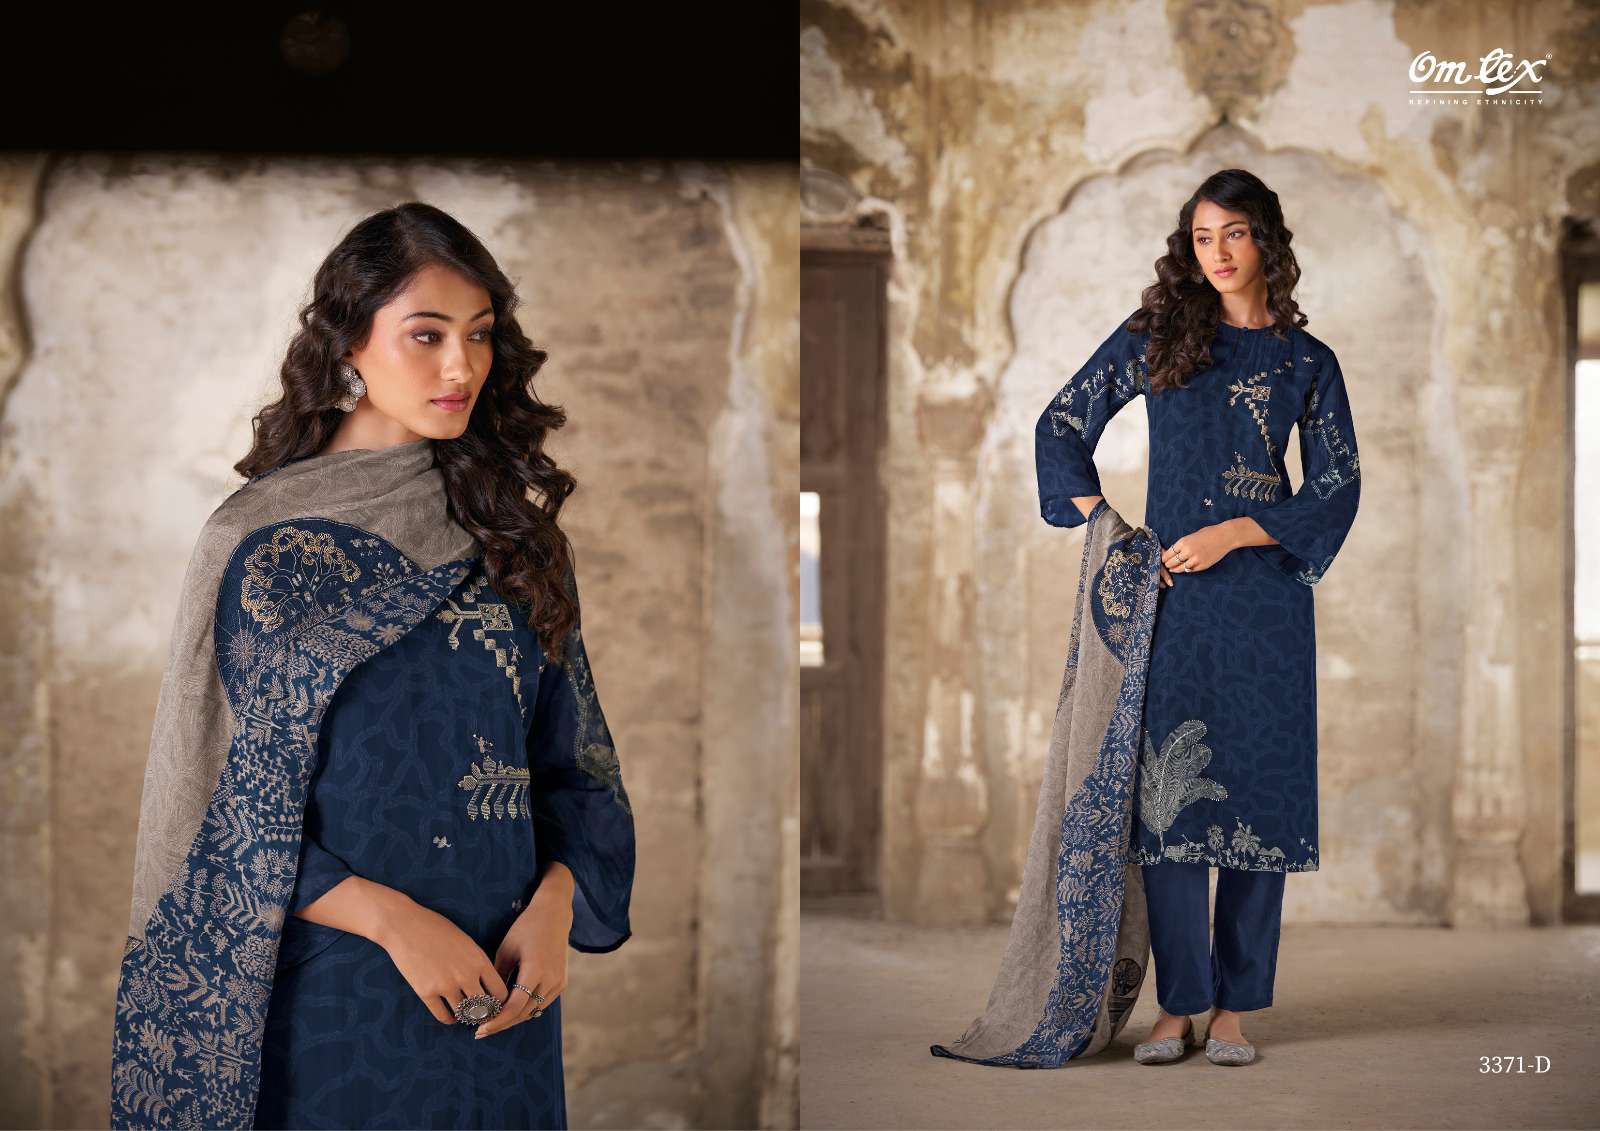 om tex tarasha 3371 colour series latest designer wedding wear muslin salwar kameez wholesale price surat